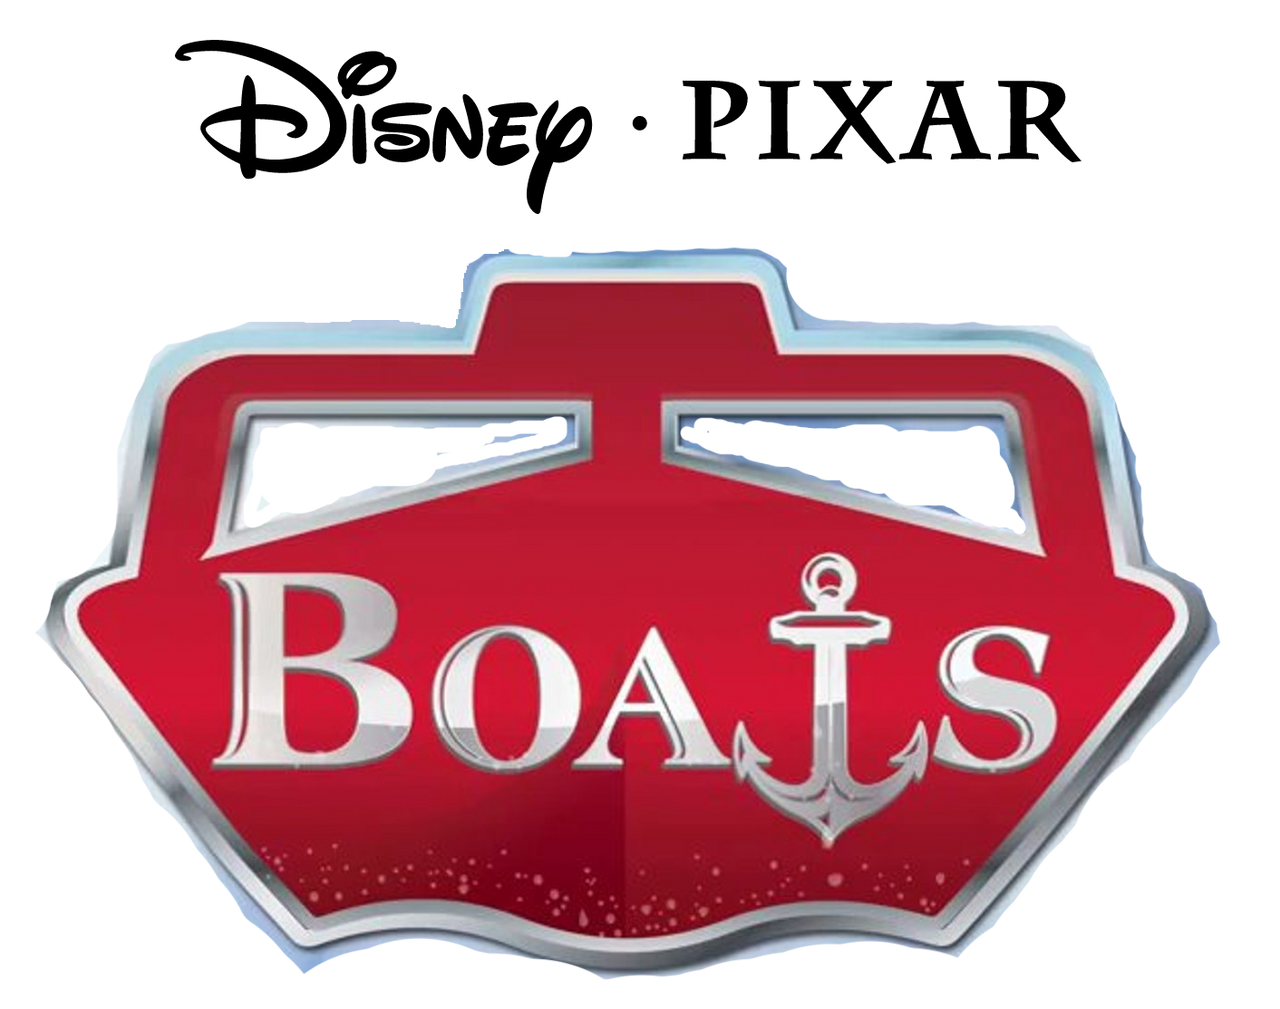 DisneyPixar Boats logo by Appleberries22 on DeviantArt